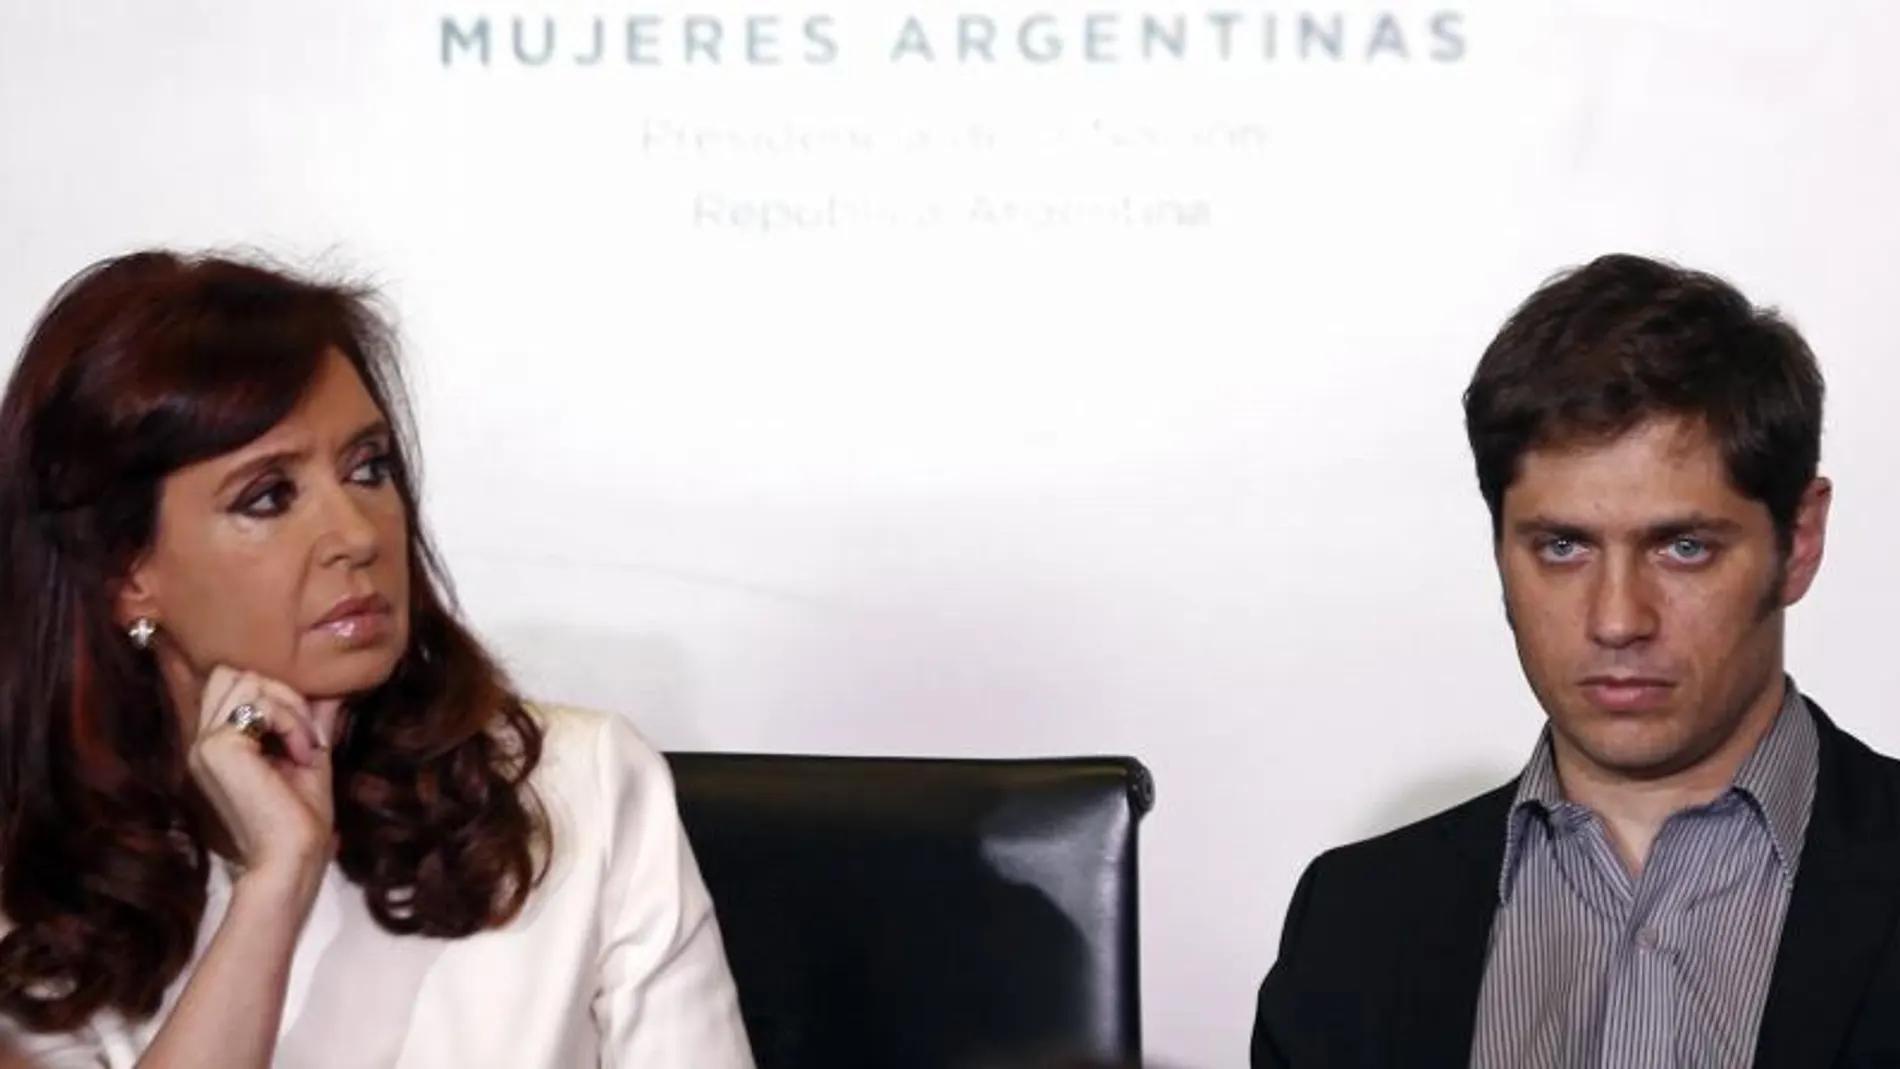 La presidenta de Argentina, Cristina Fernandez de Kirchner, junto al ministro de Economía, Axel Kicillof